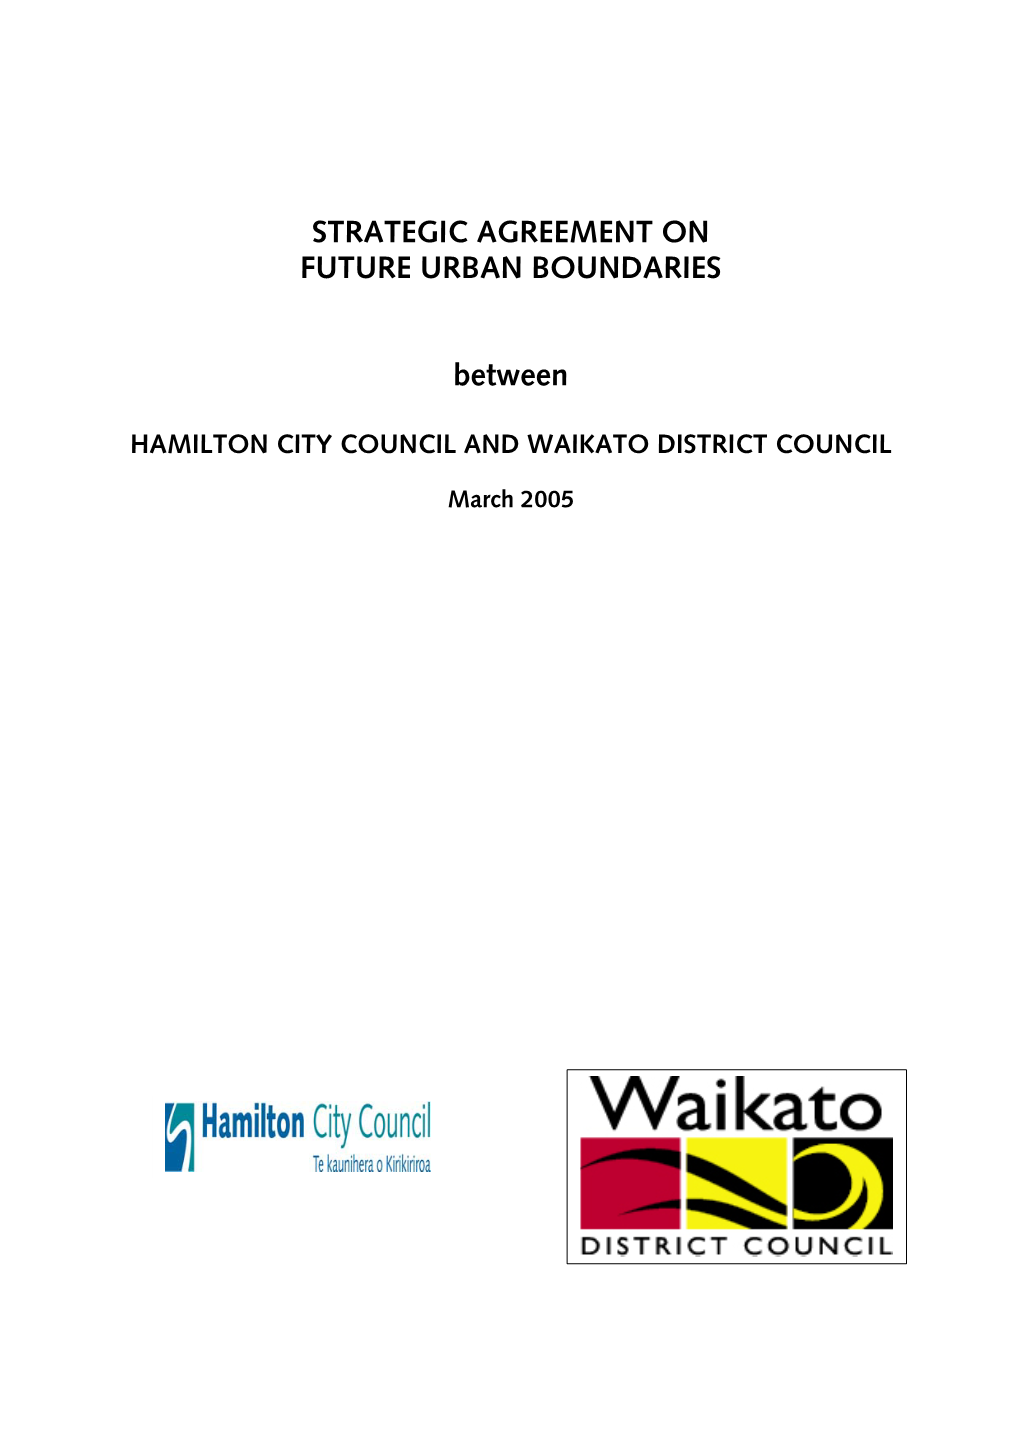 Strategic Agreement on Future Urban Boundaries.Pdf